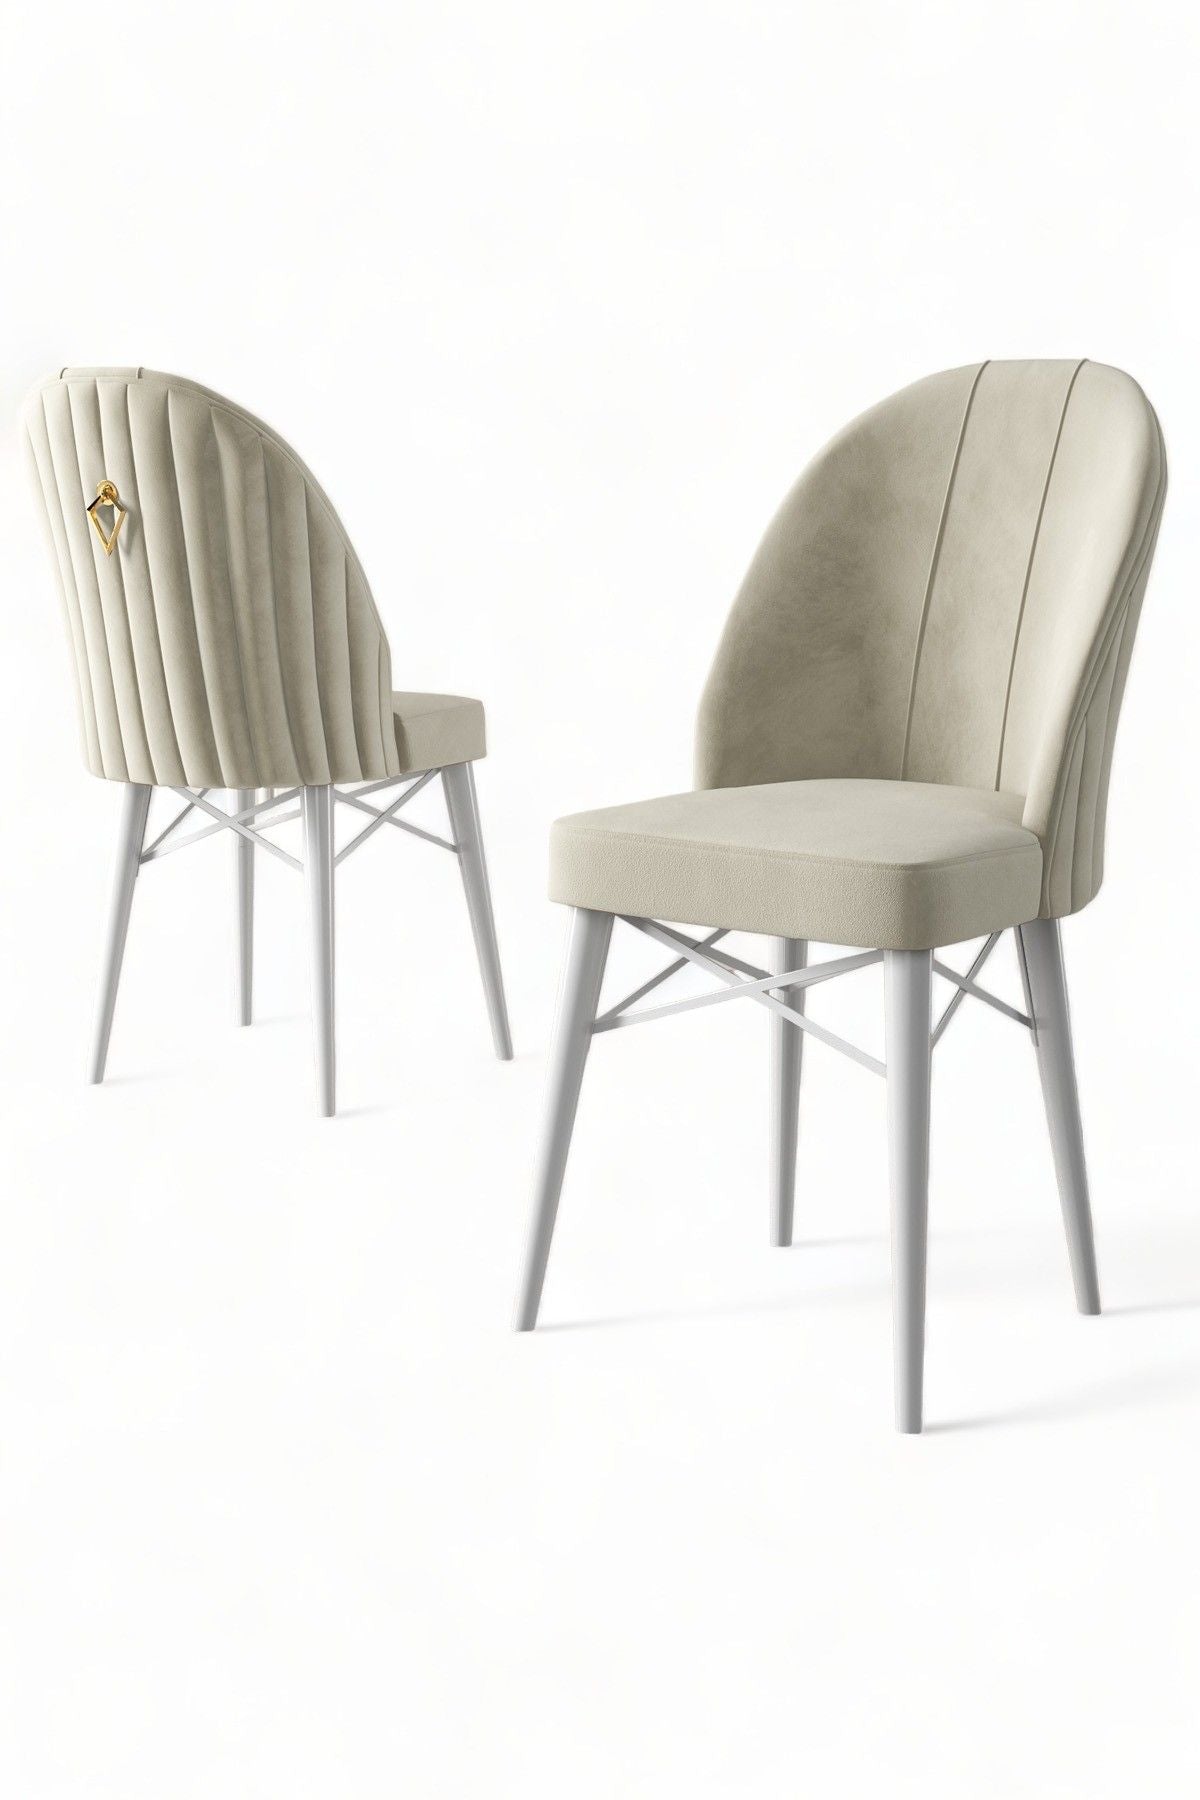 Ritim - Cream, White - Chair Set (4 Pieces)